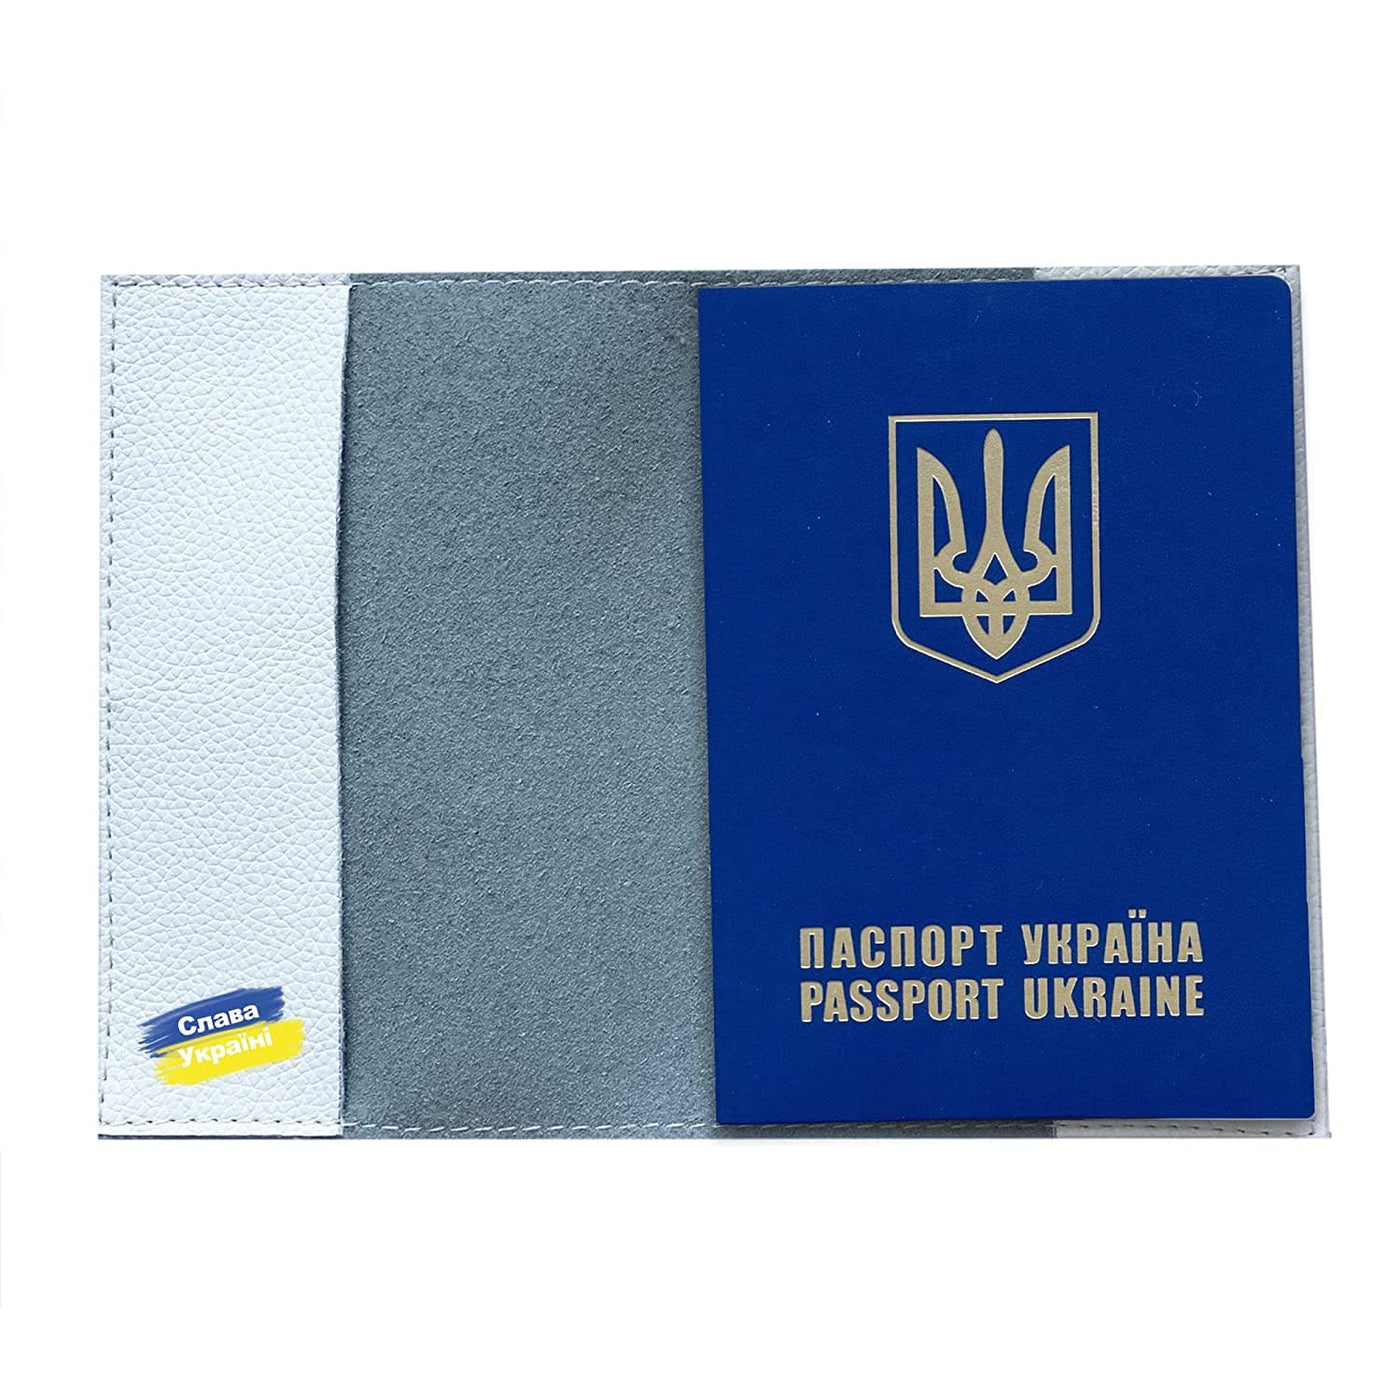 Обкладинка на паспорт - Be Brave Like Ukraine - Gisolo